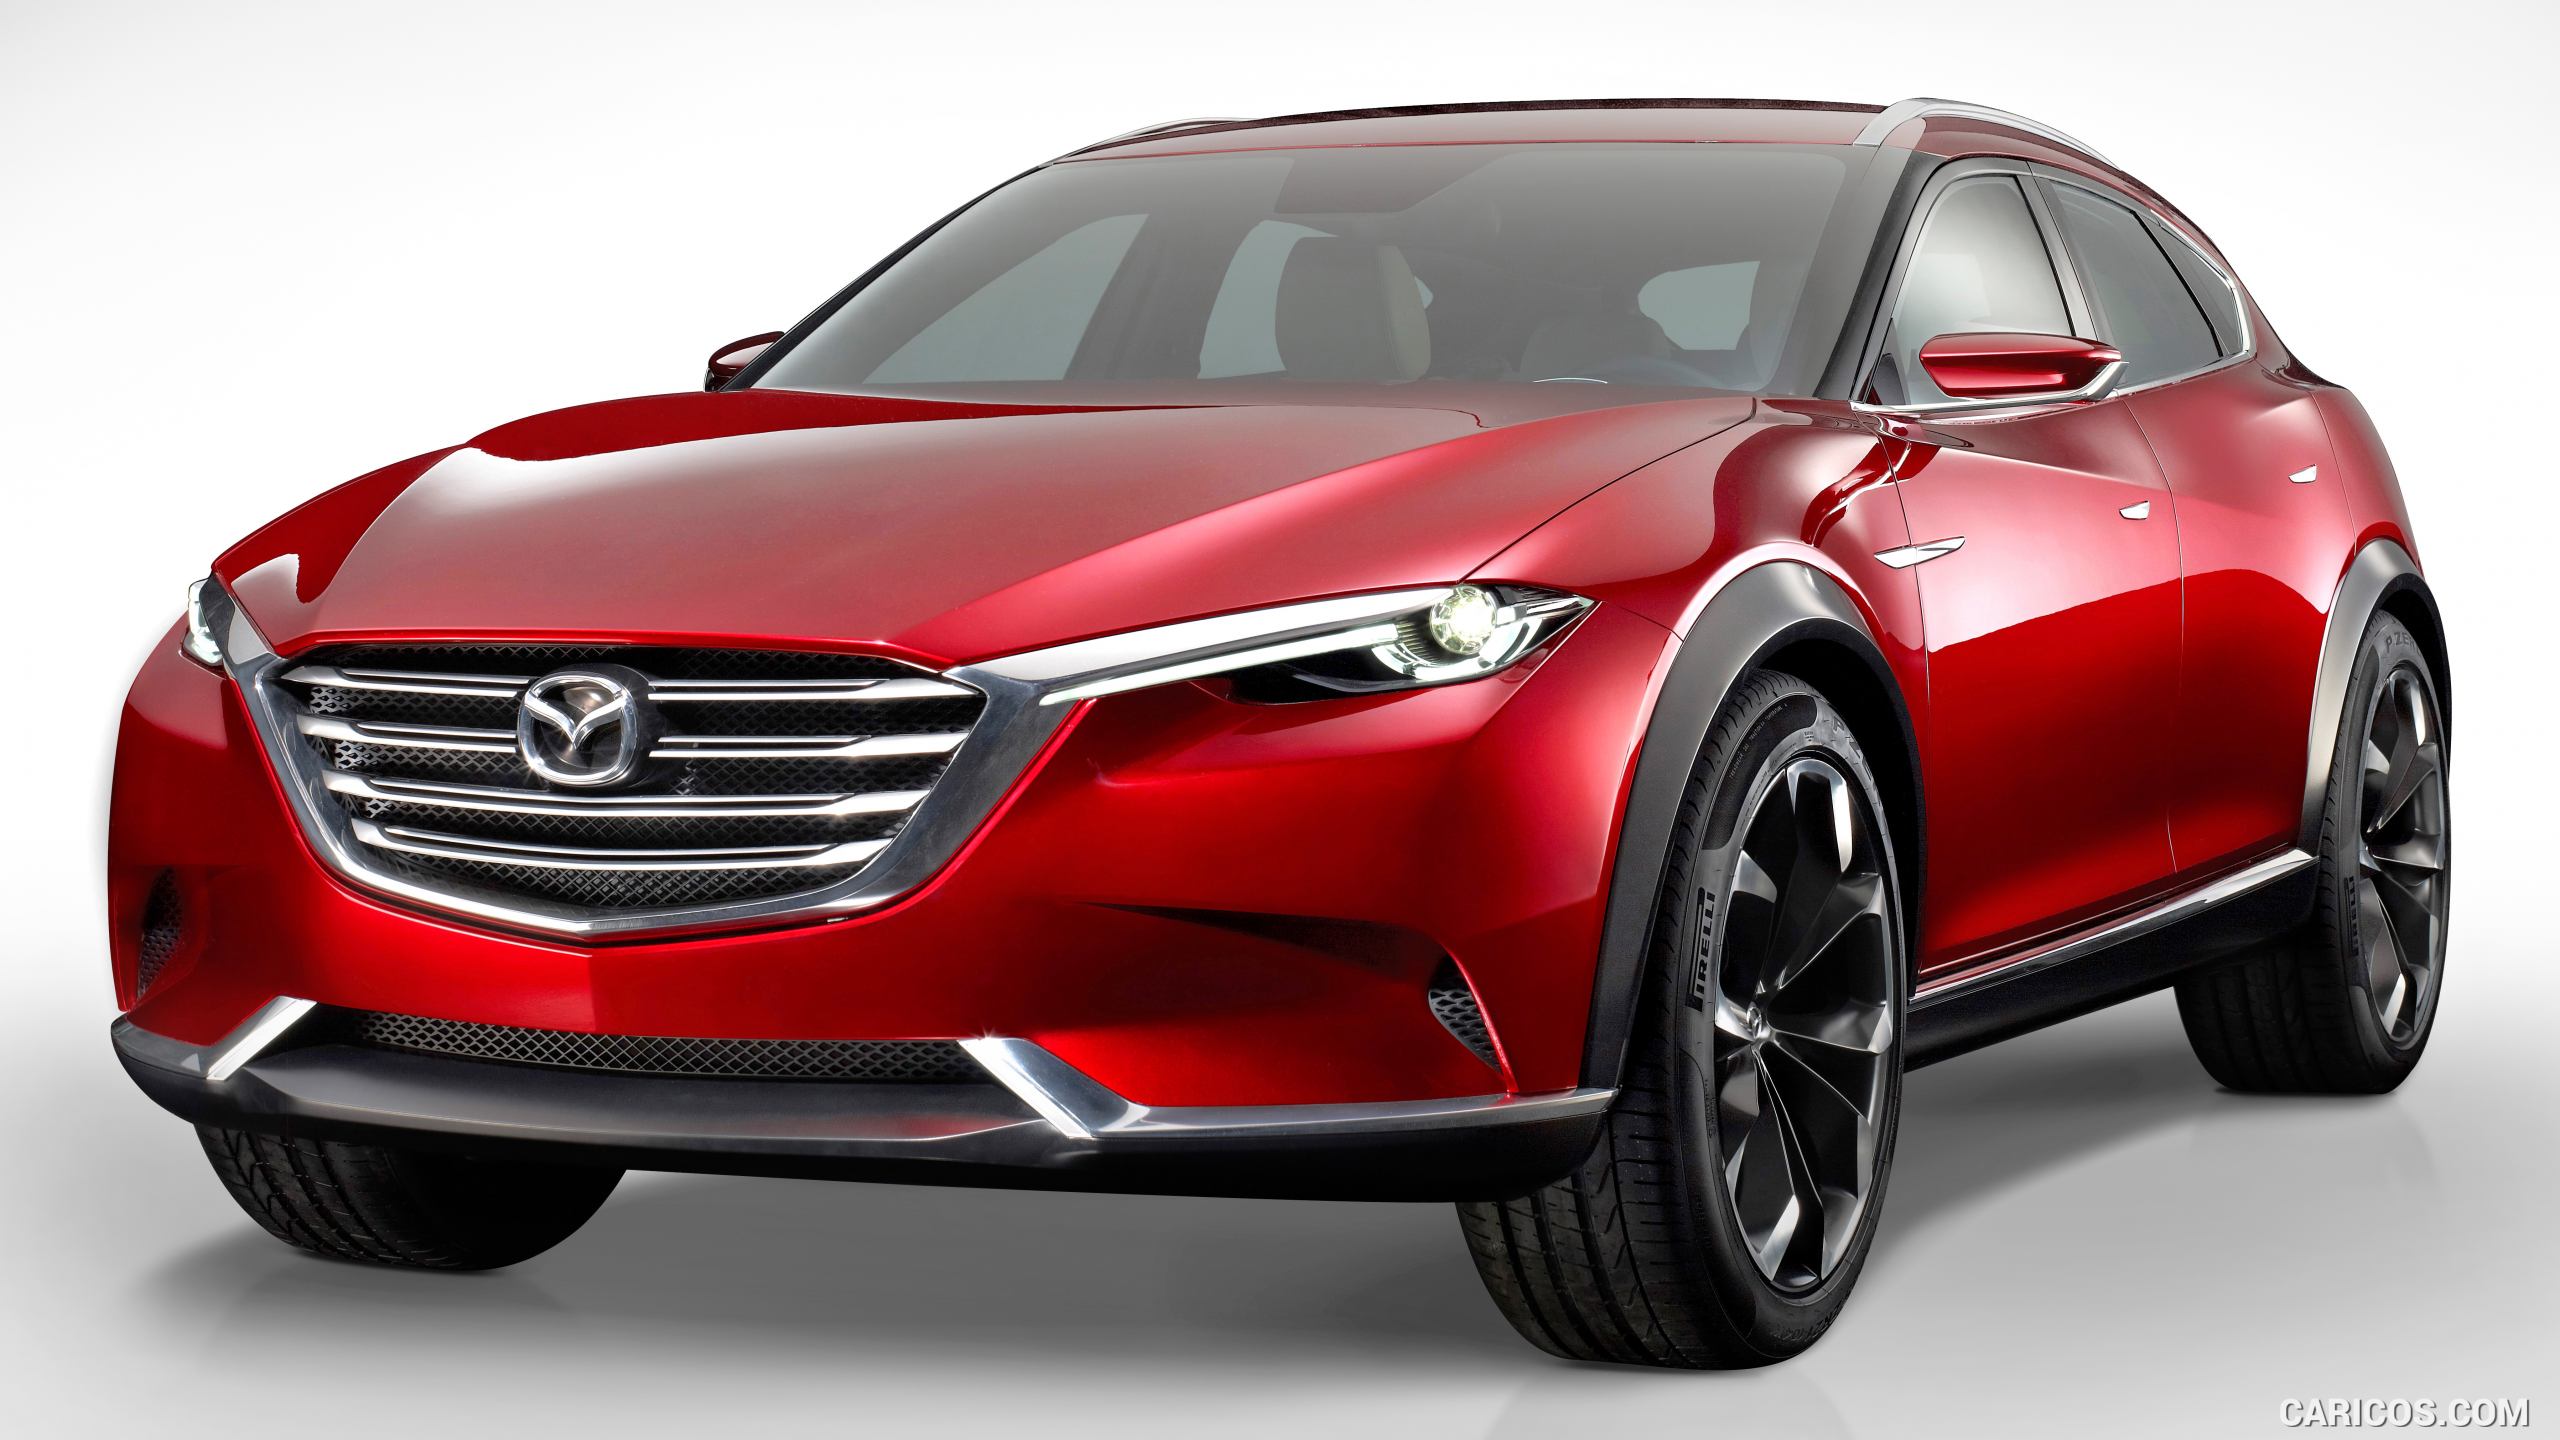 2015 Mazda Koeru Crossover Concept - Front, #3 of 17